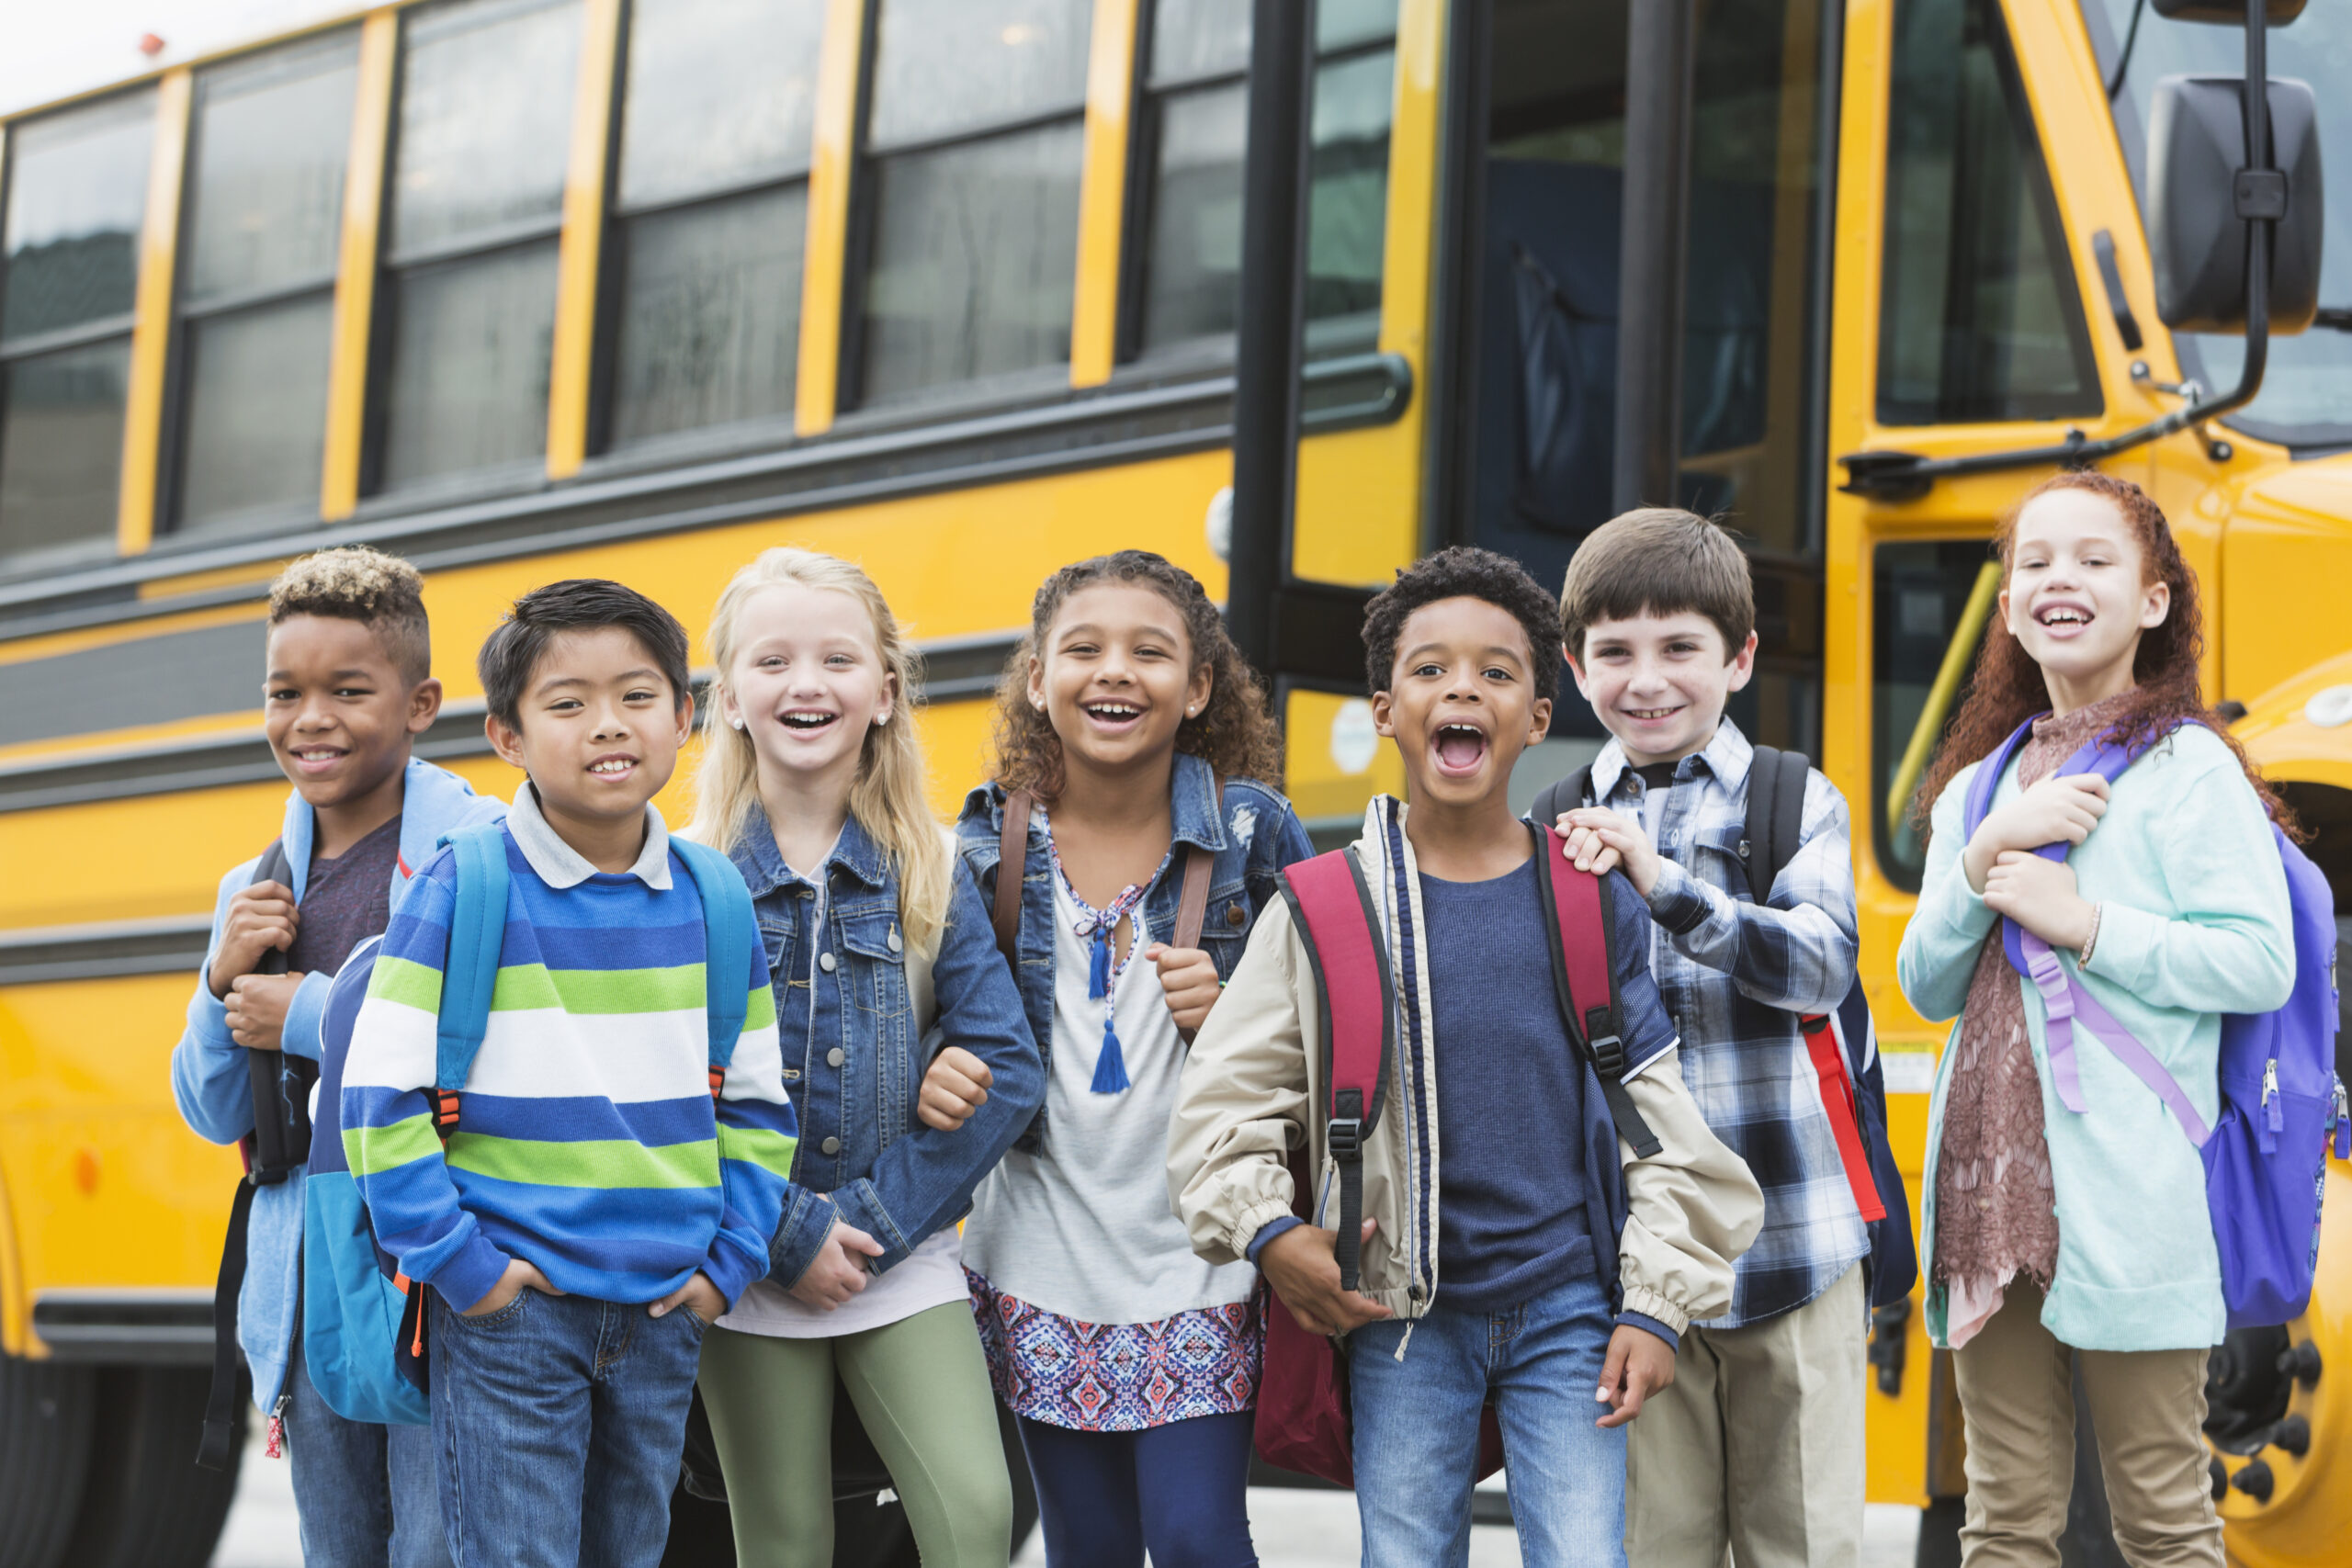 Elementary school children waiting outside bus